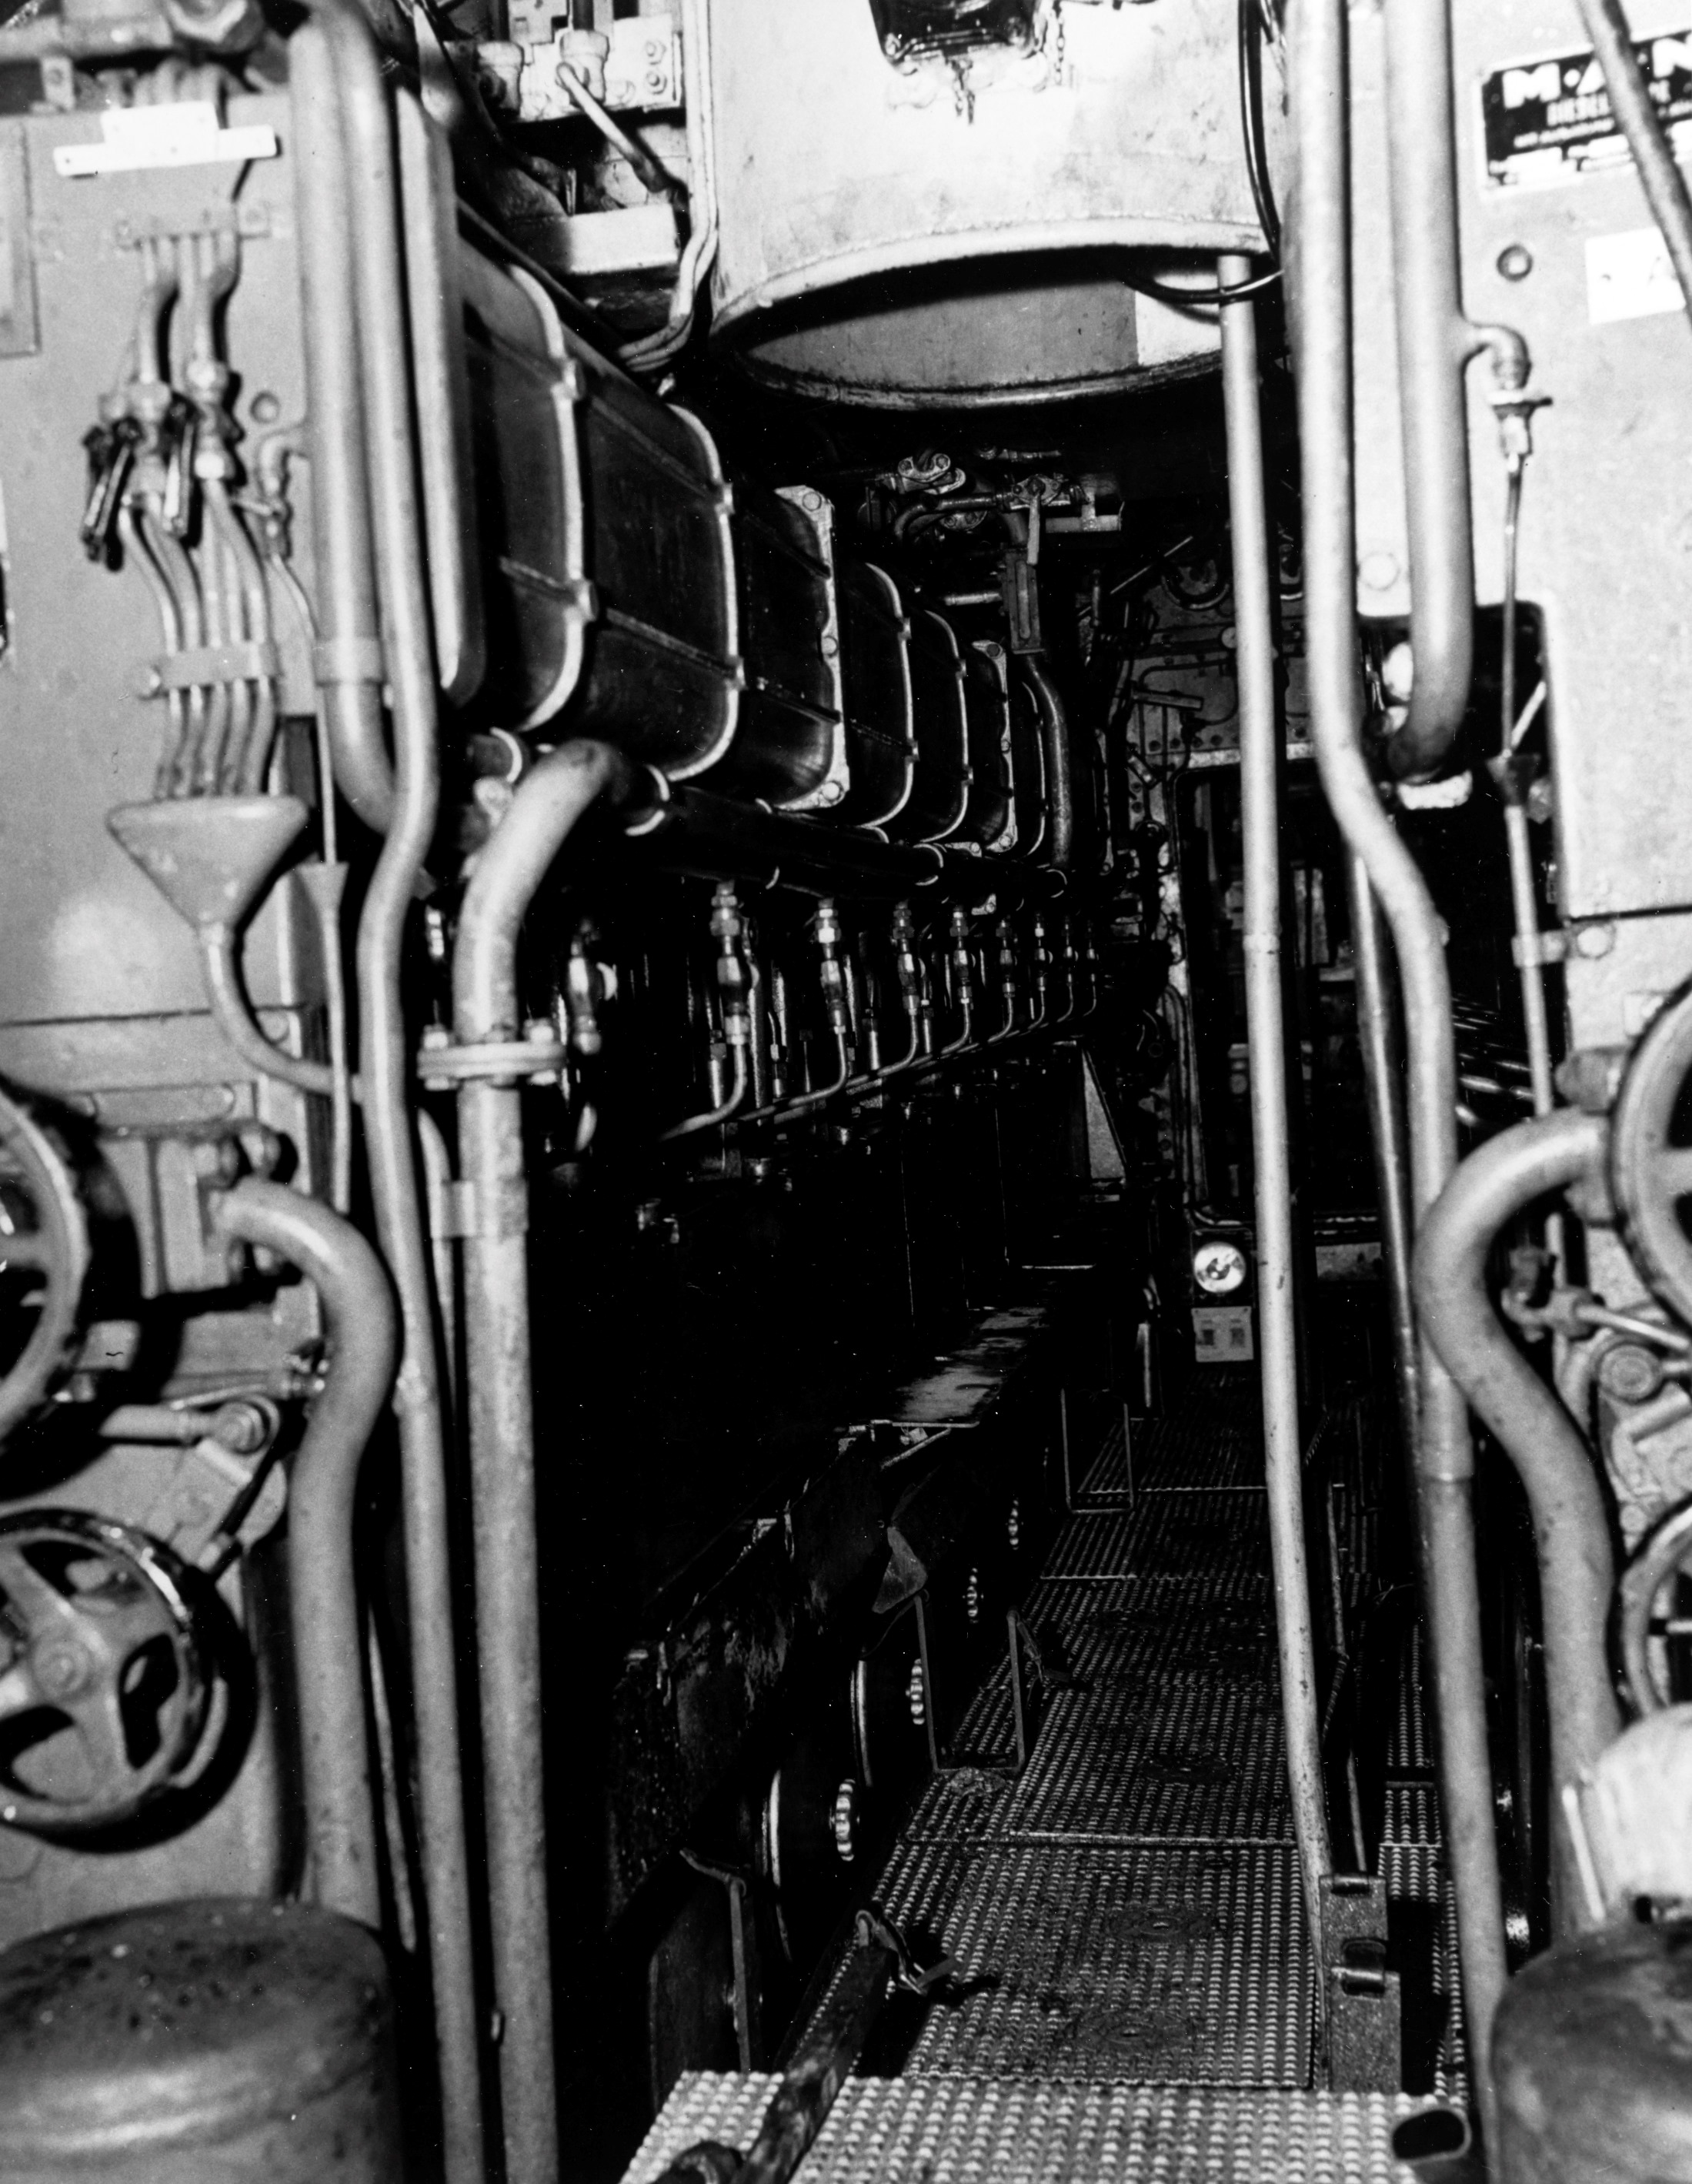 US Navy photo of the diesel engines aboard the captured U-505, 14 Jun 1944